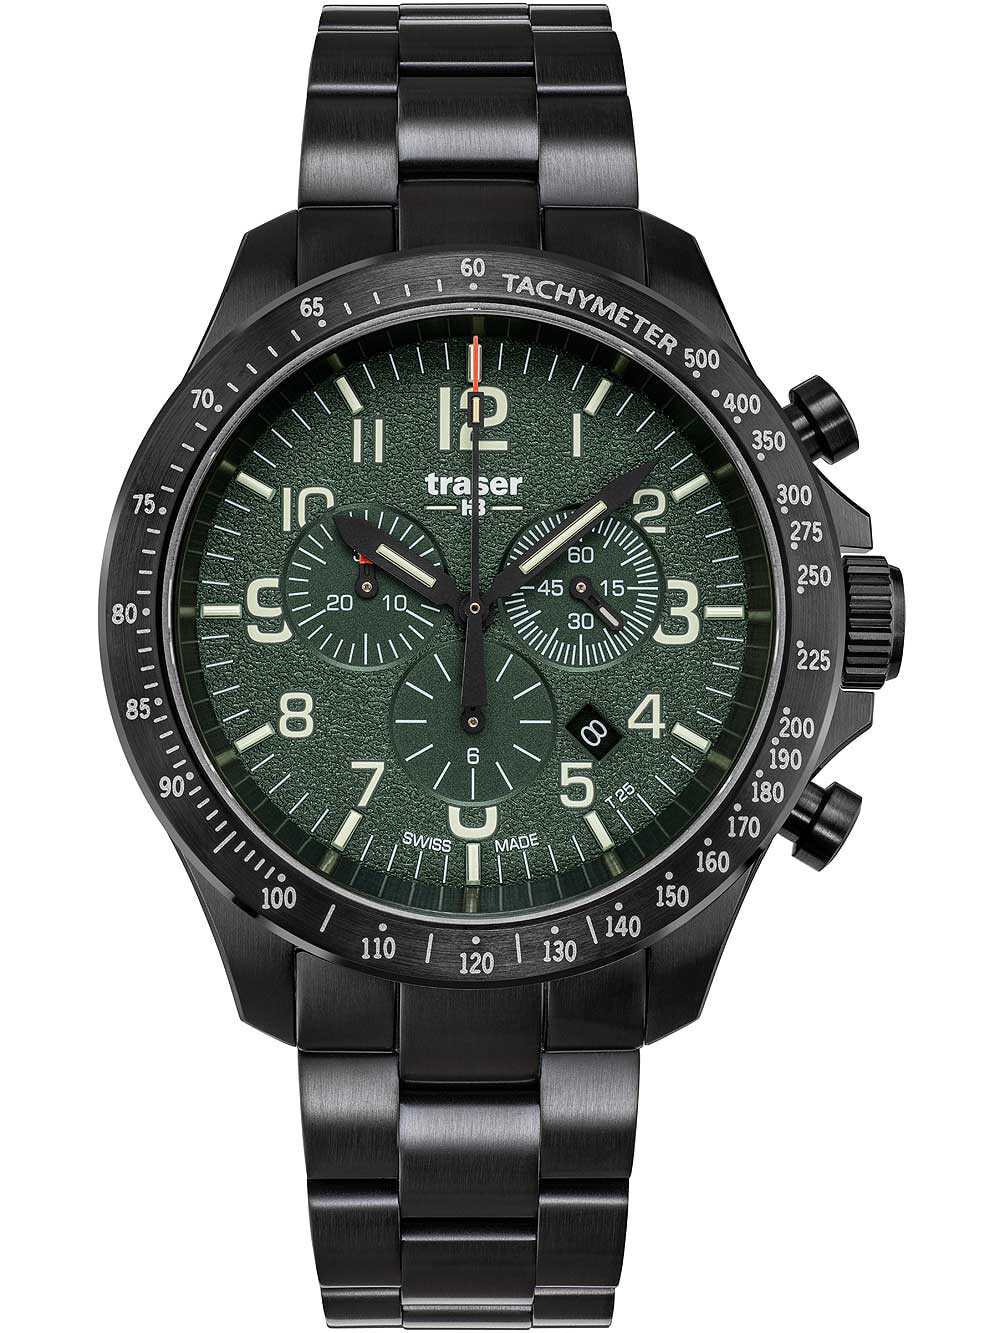 Мужские наручные часы с черным браслетом Traser H3 109464 P67 Officer chrono green steel 46mm 10ATM